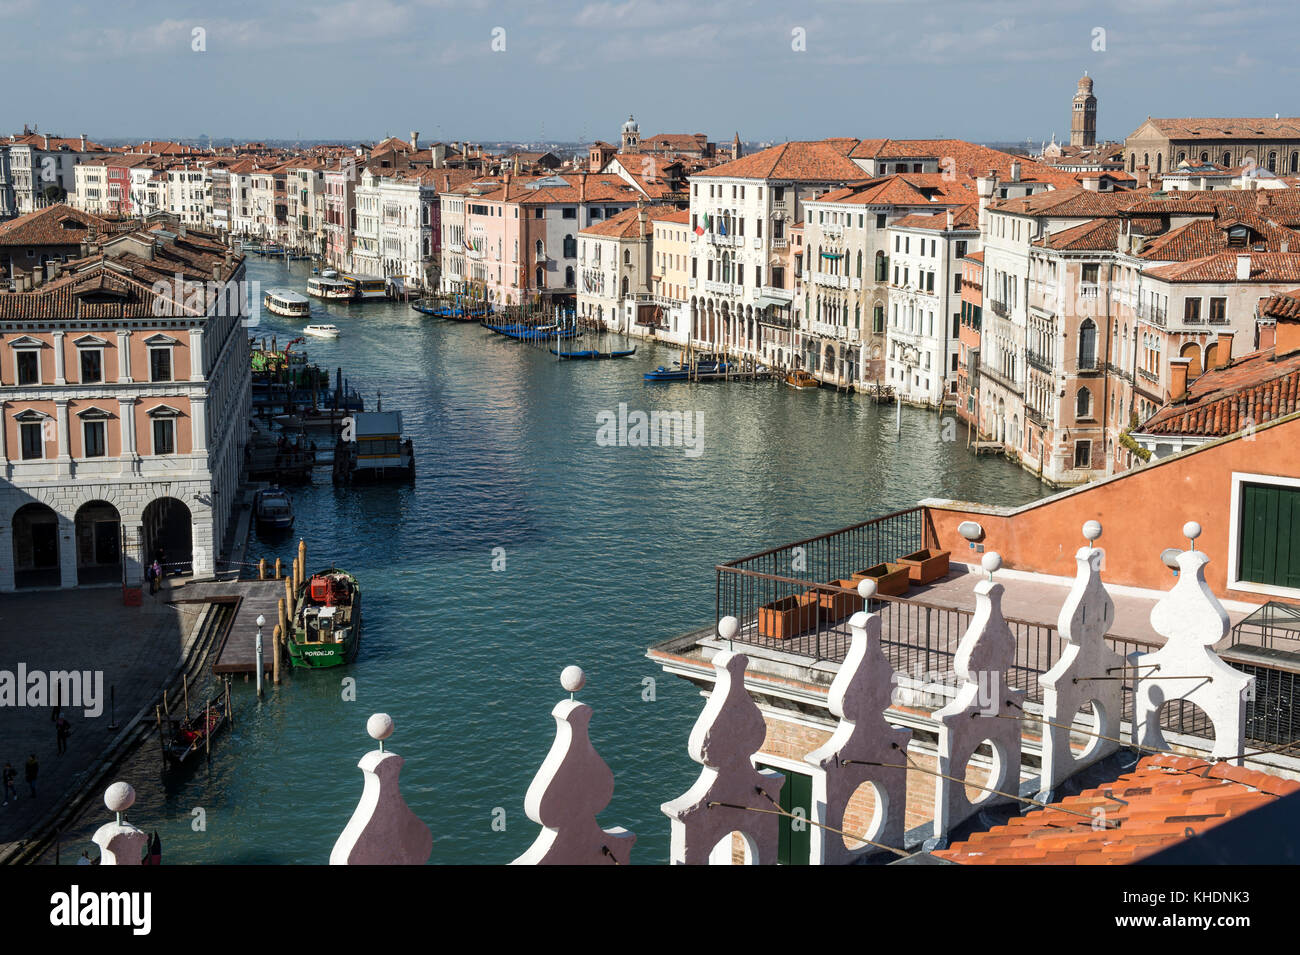 ITALY, VENETO, VENICE, VIEW OF THE GRAND CANAL FROM THE FONDACO DEI TEDESCHI TERRACE Stock Photo